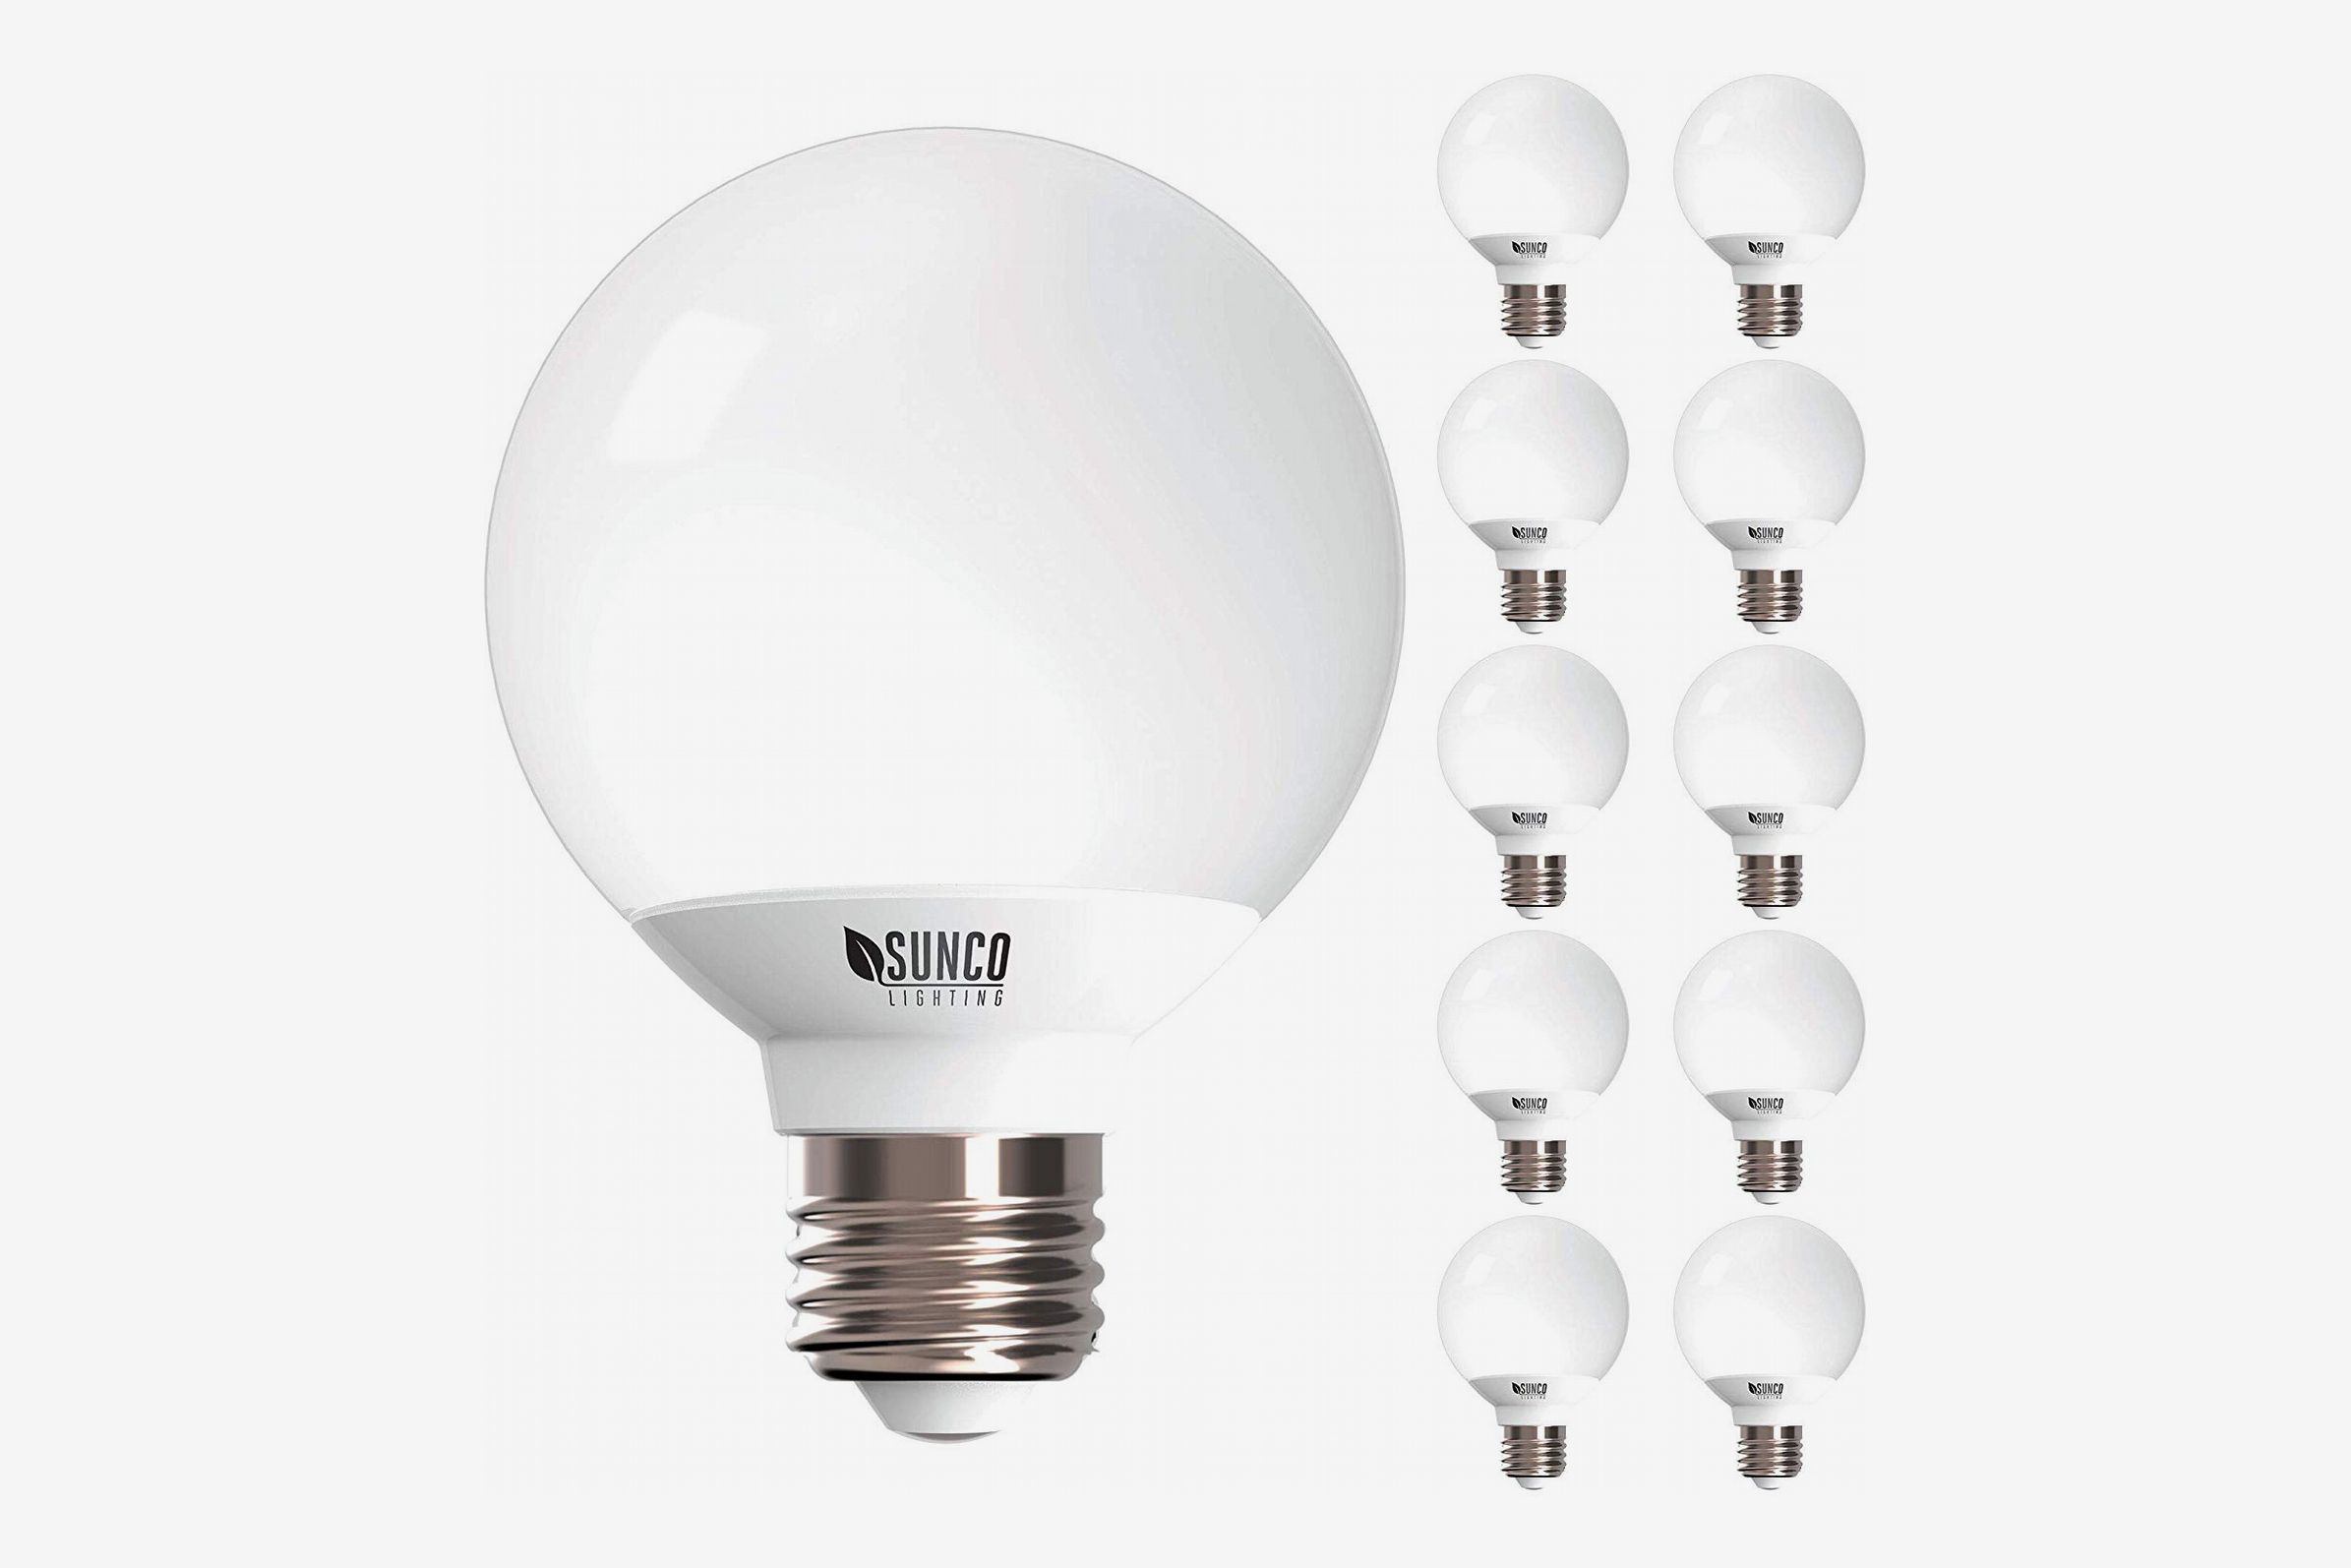 14 Best Led Light Bulbs 2020 The, What Are The Best Light Bulbs For Bathroom Vanity